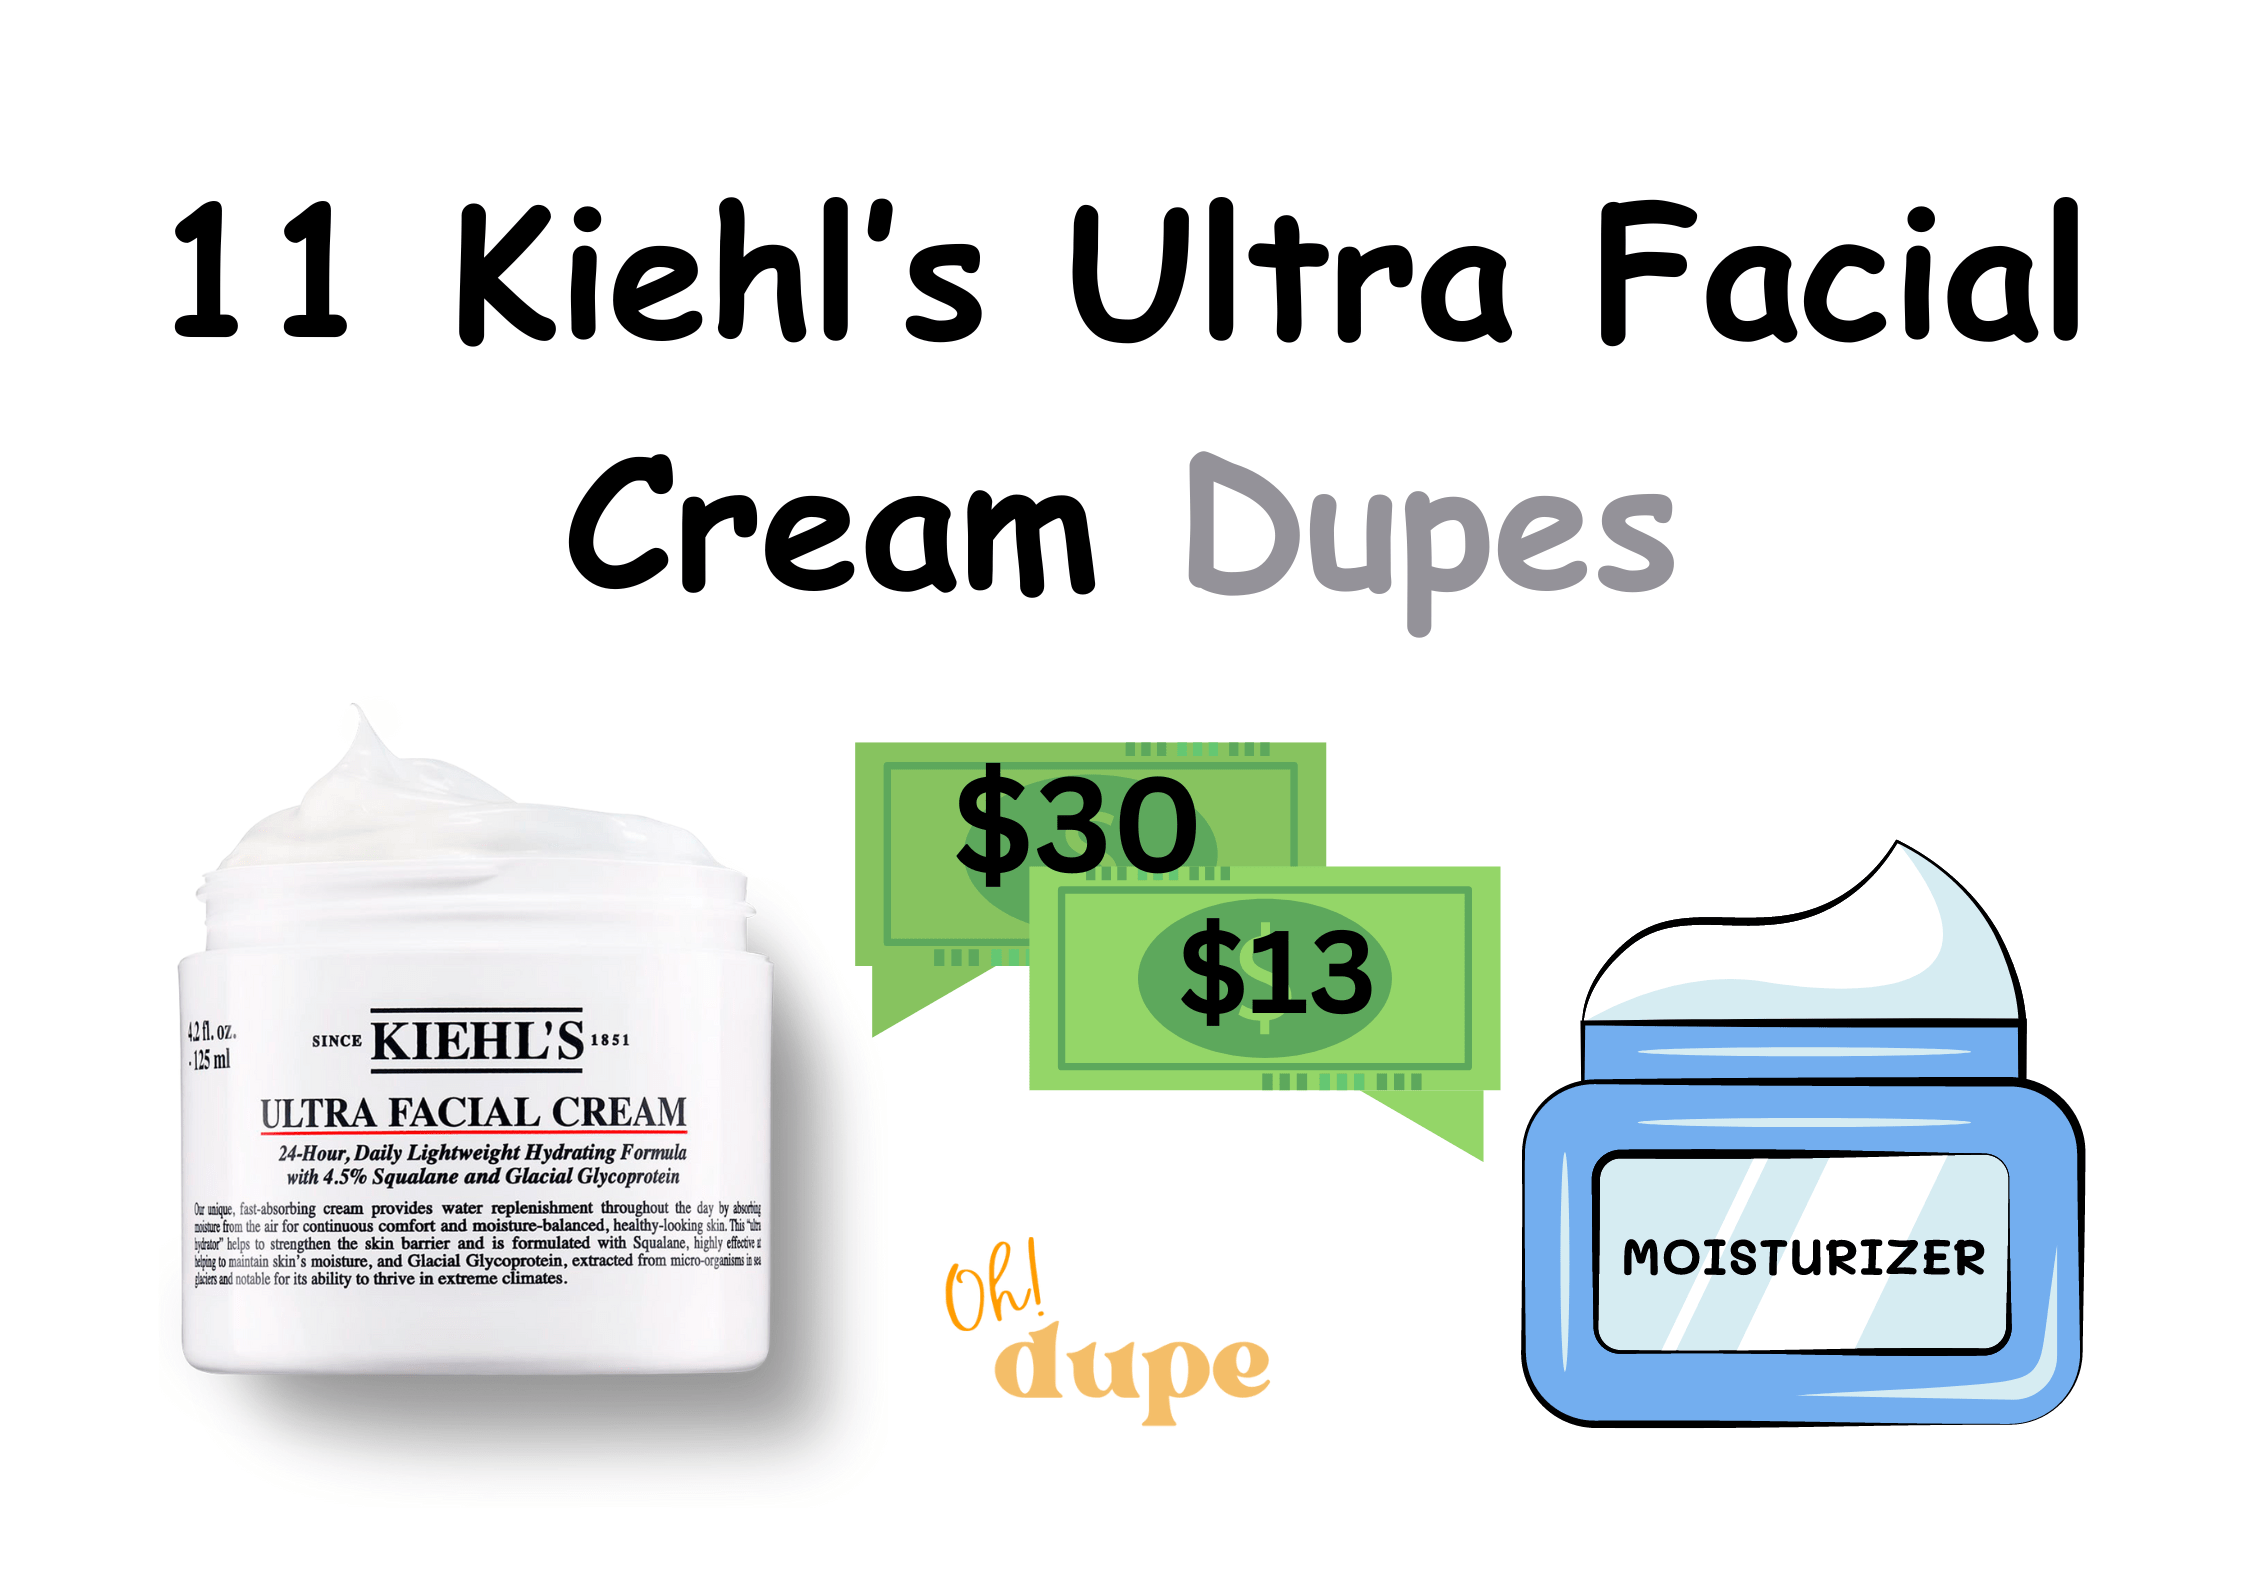 Kiehl’s Ultra Facial Cream Dupe